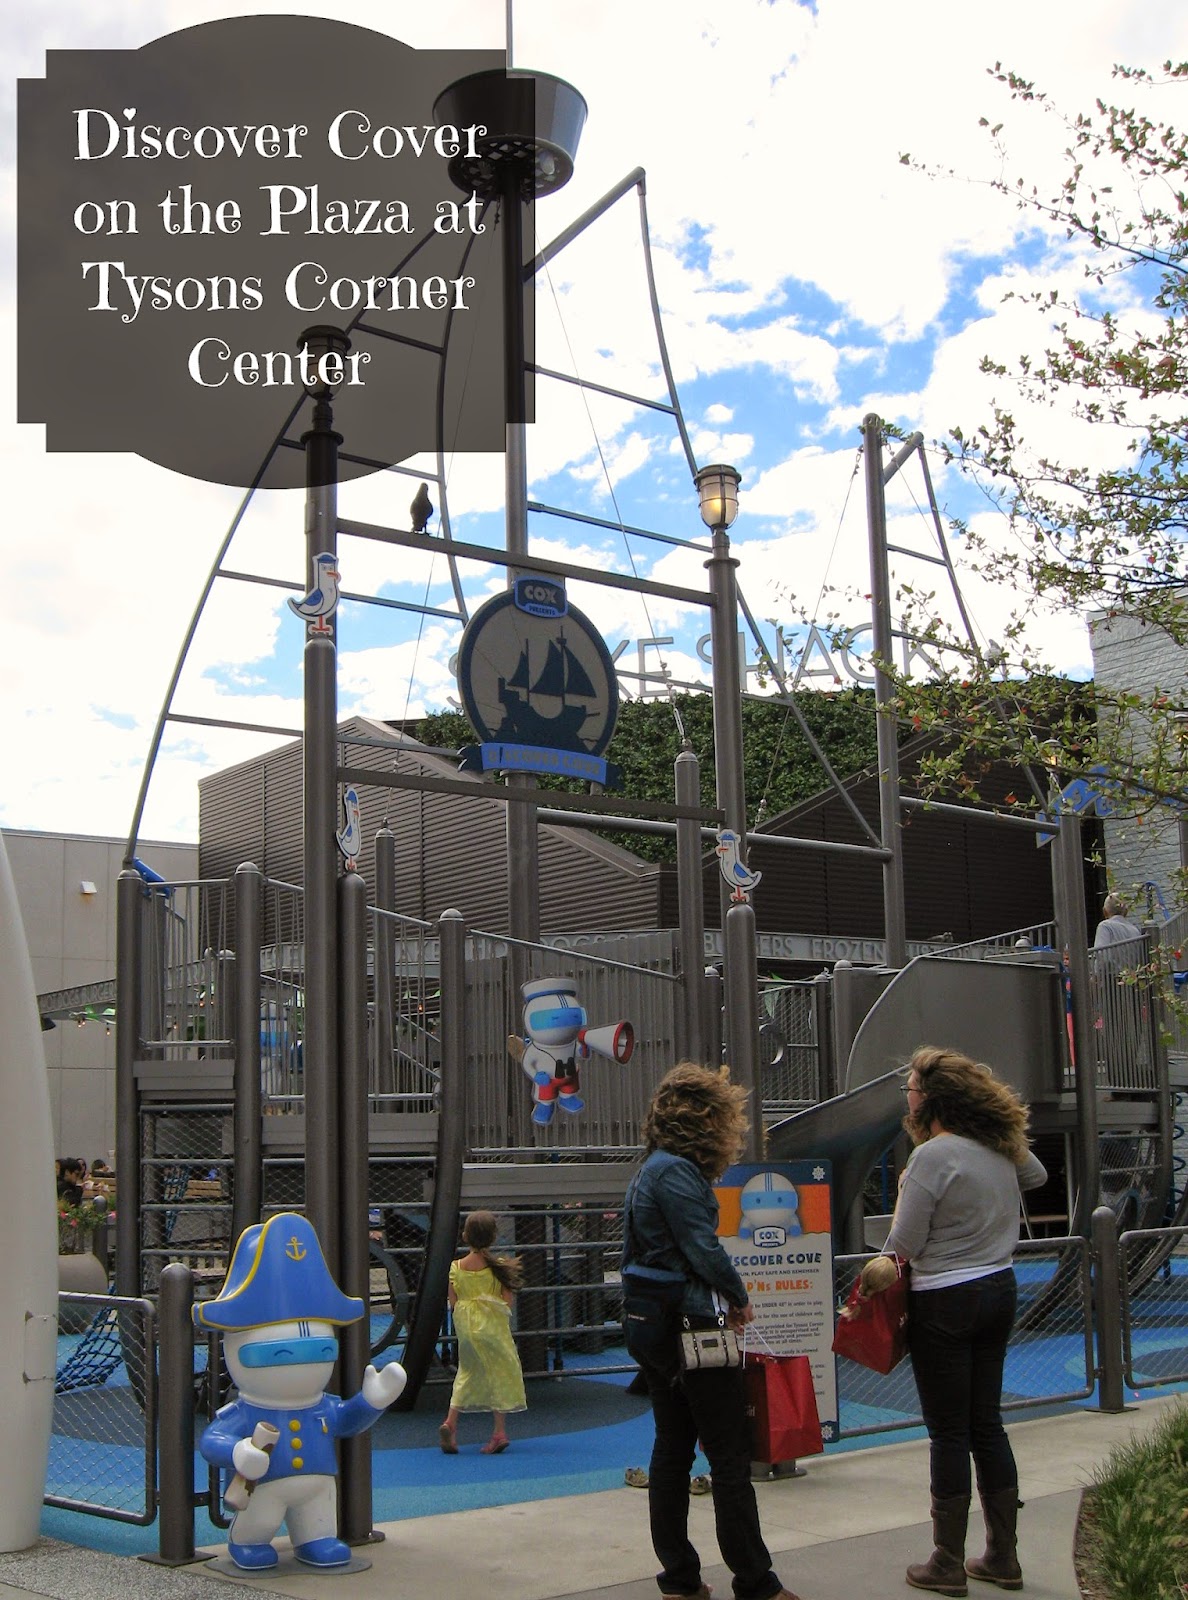 Things to Do in Tysons Corner, Virginia